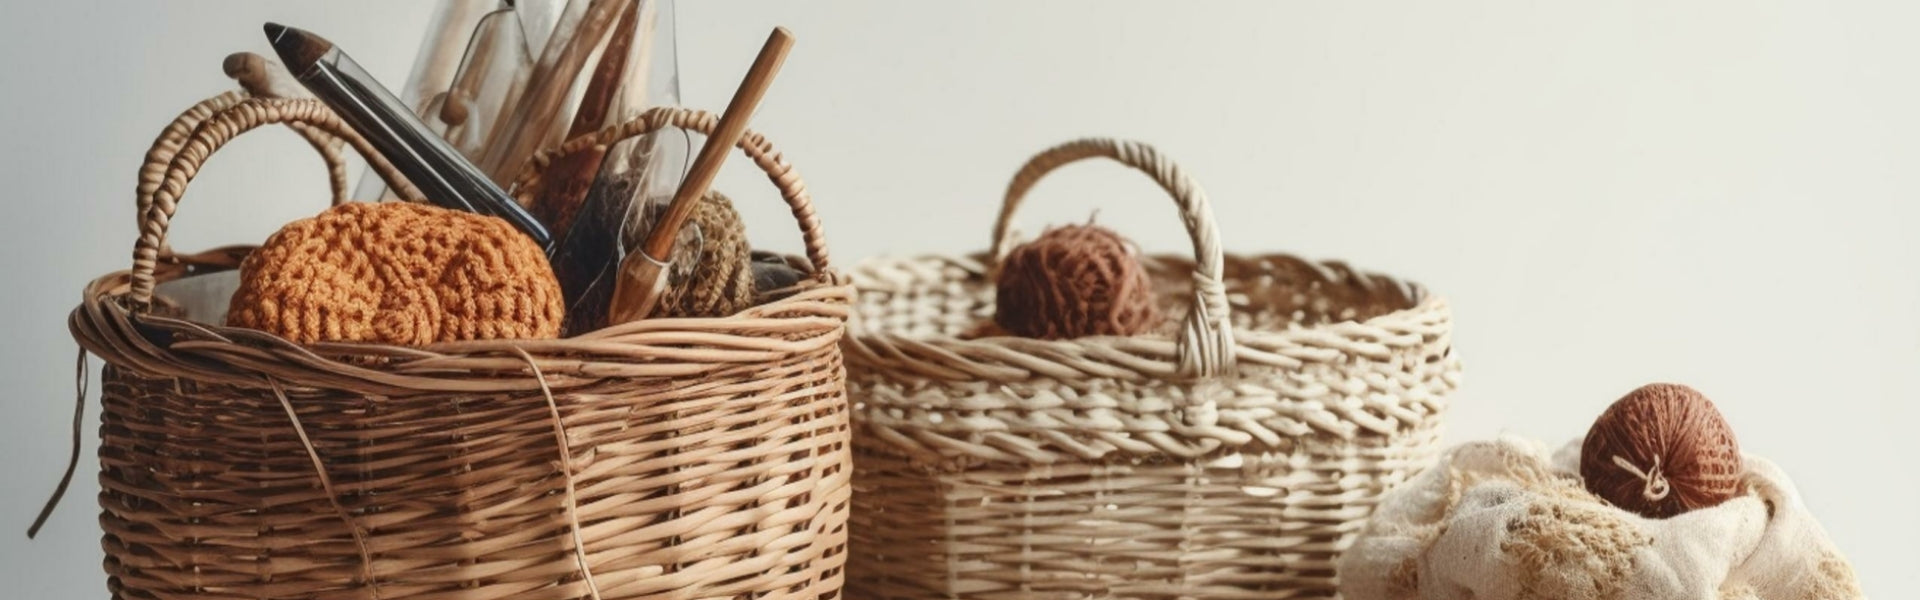 Storage | The Willow Basket